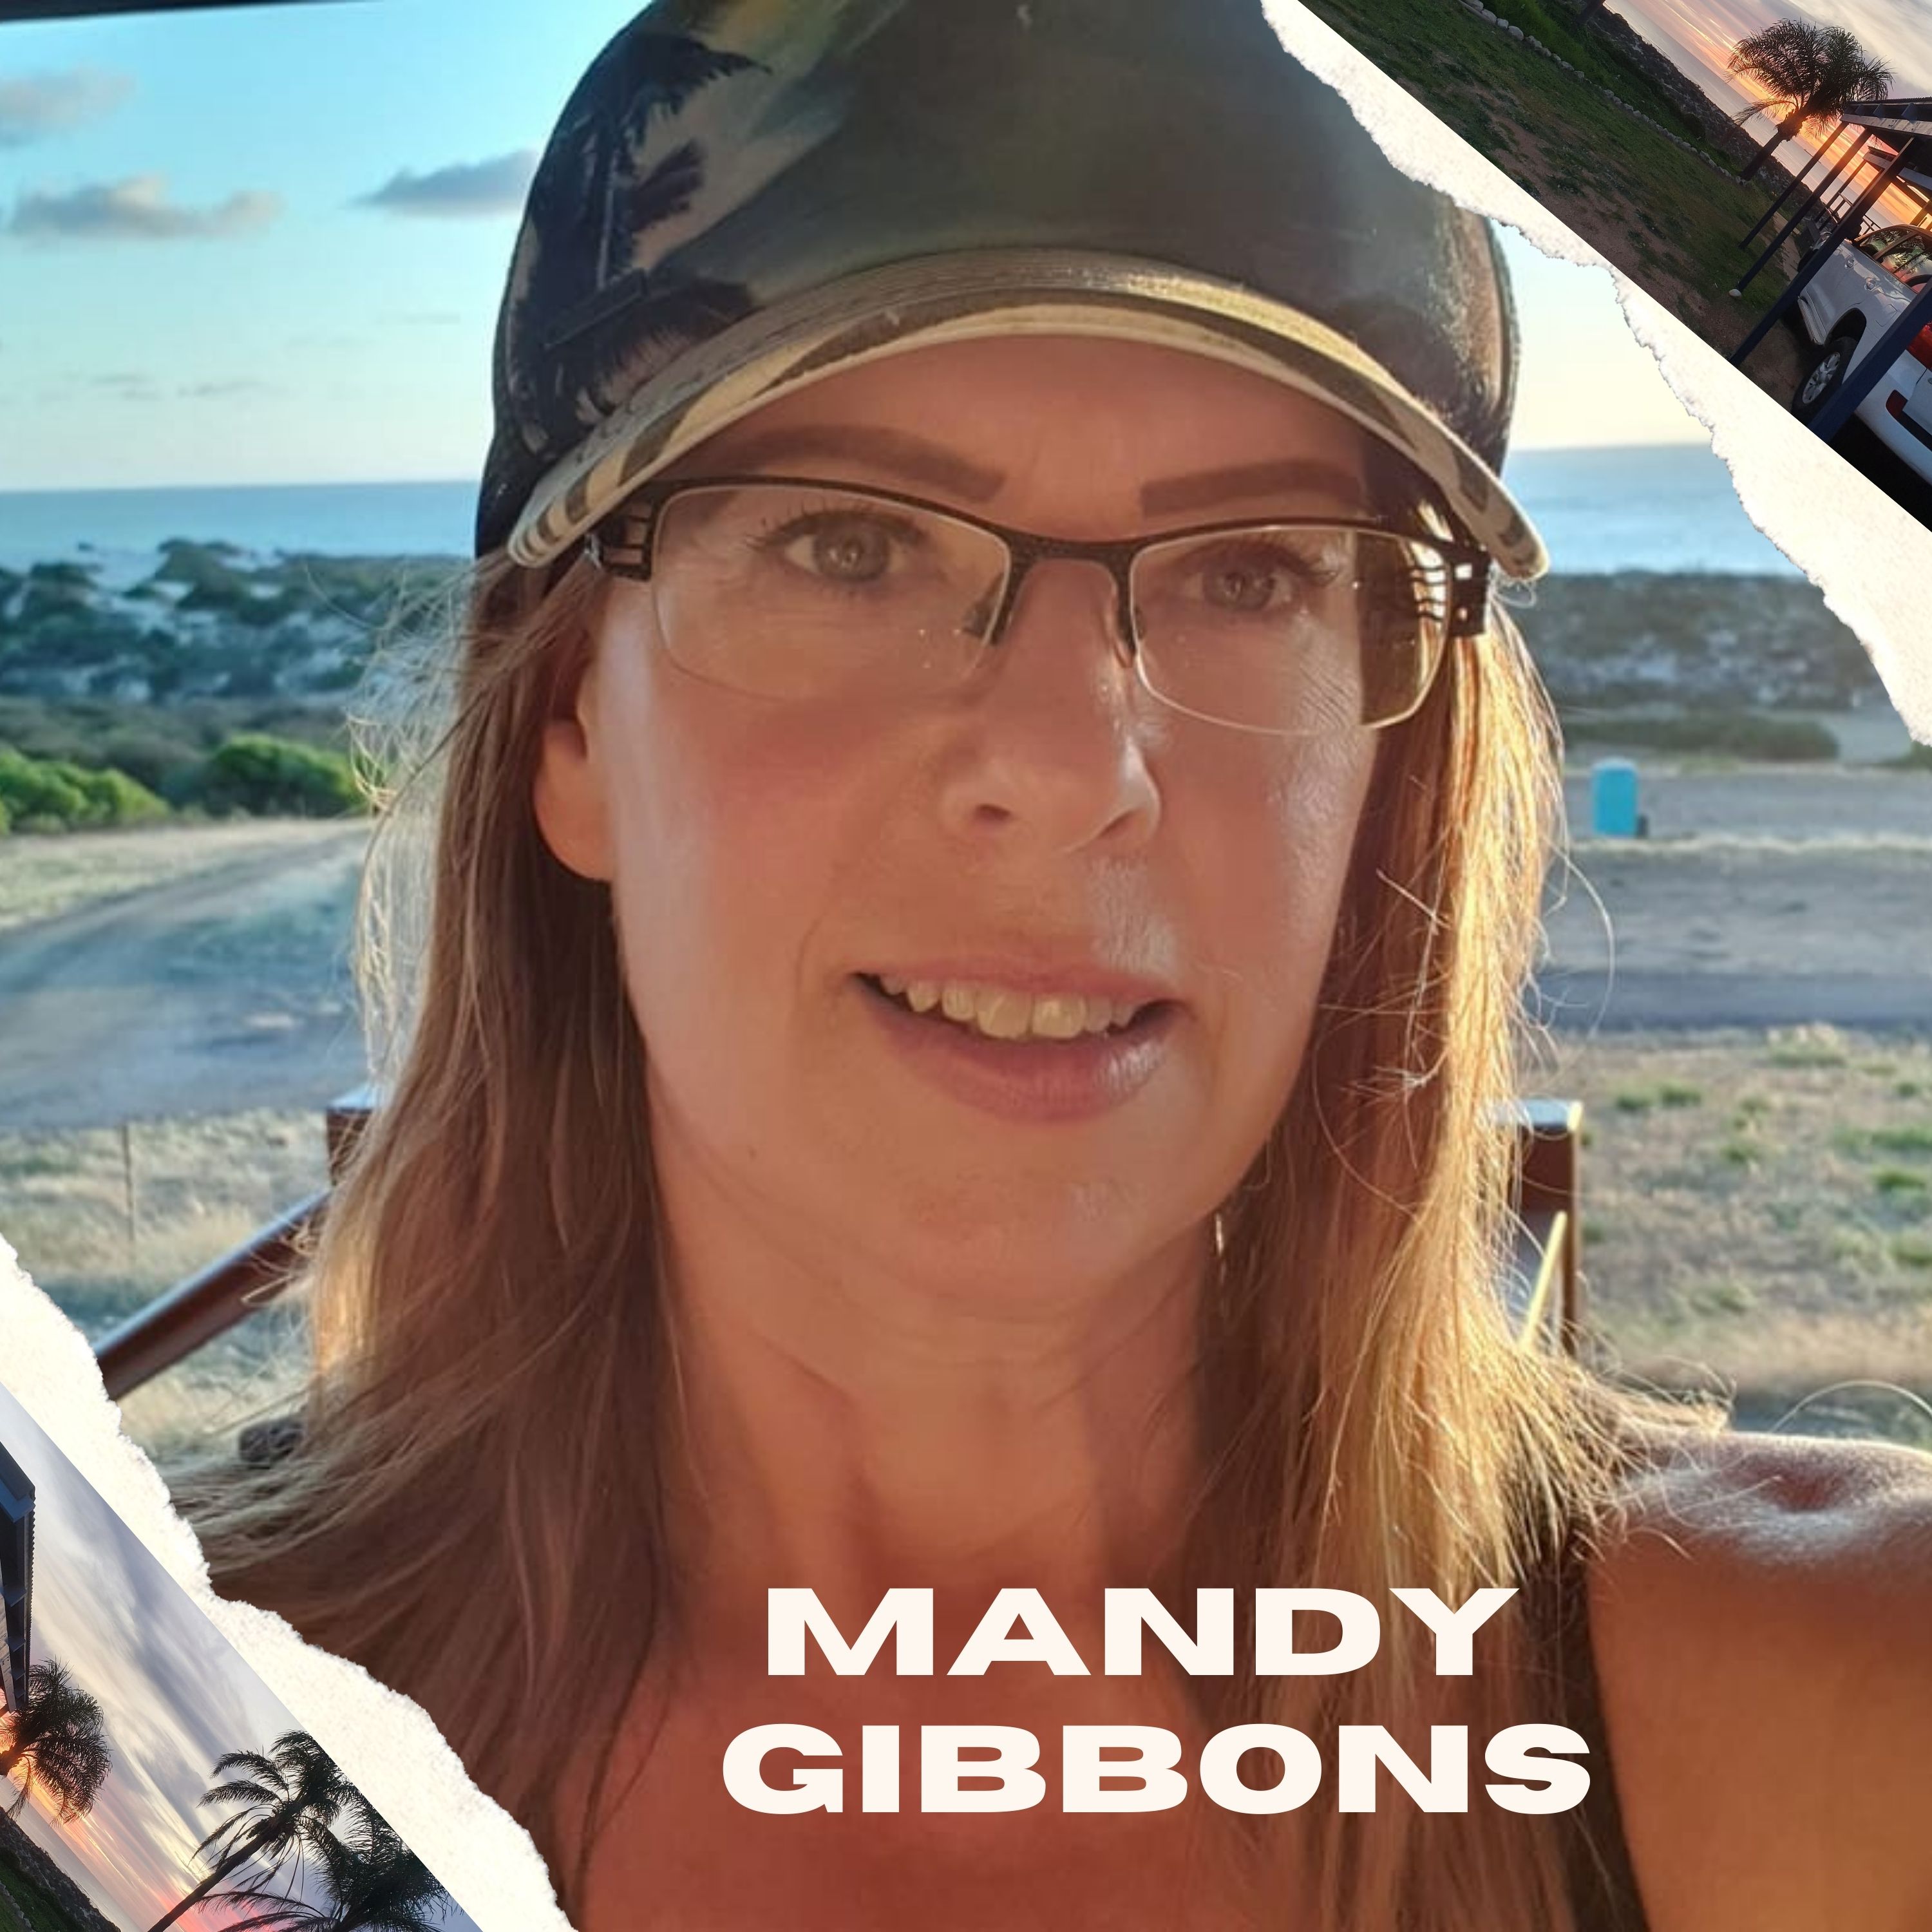 Mandy Gibbons